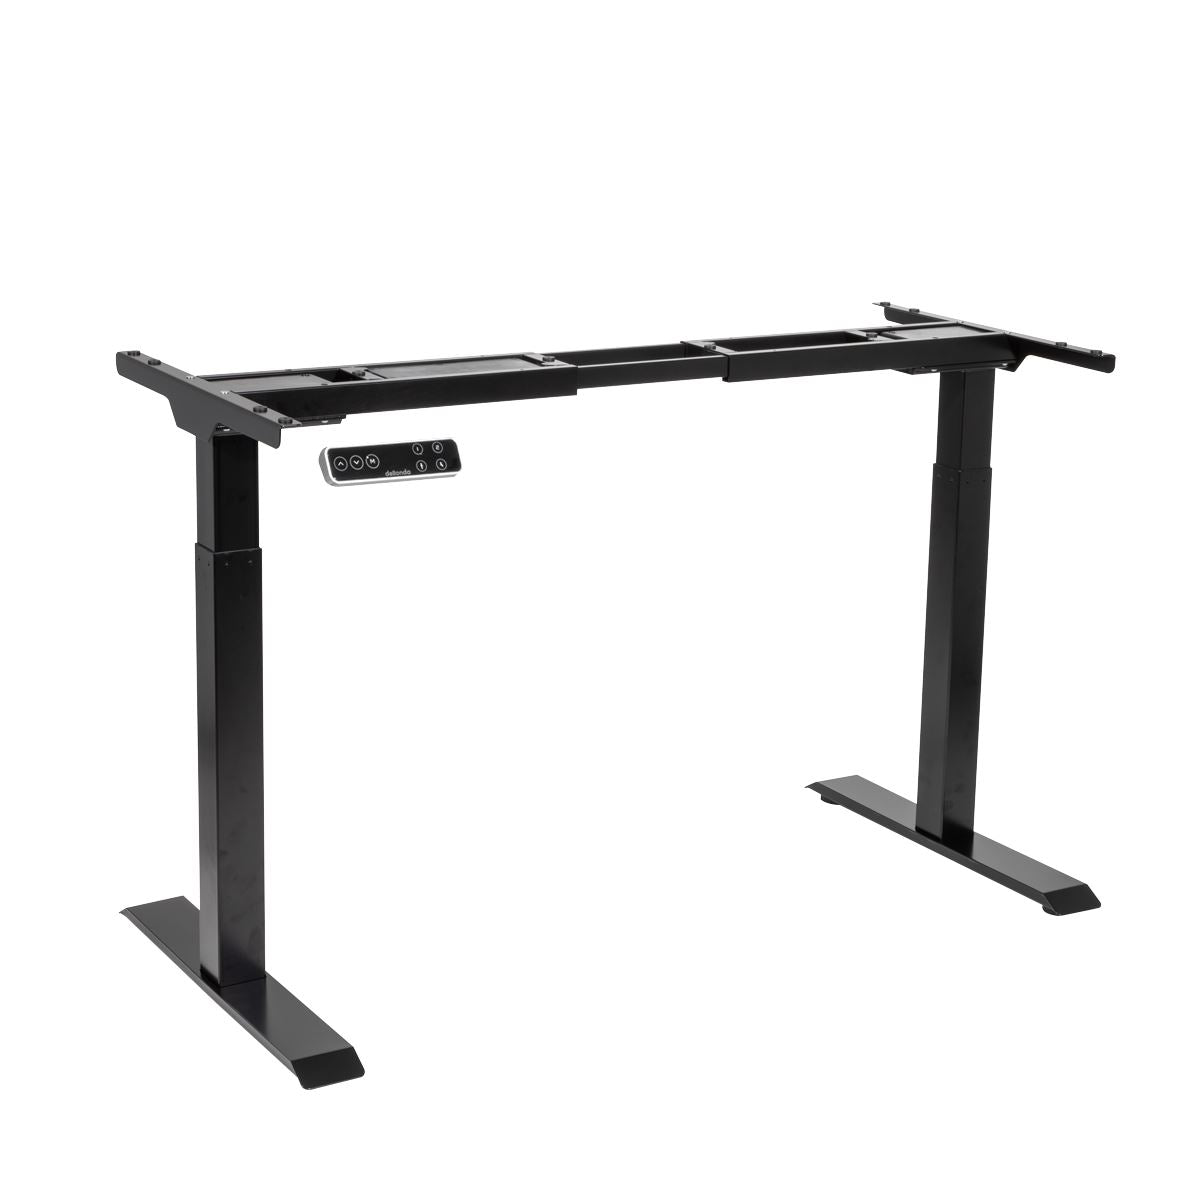 Dellonda Black Electric Adjustable Desk Frame, Digital Controls 100kg Heavy Duty